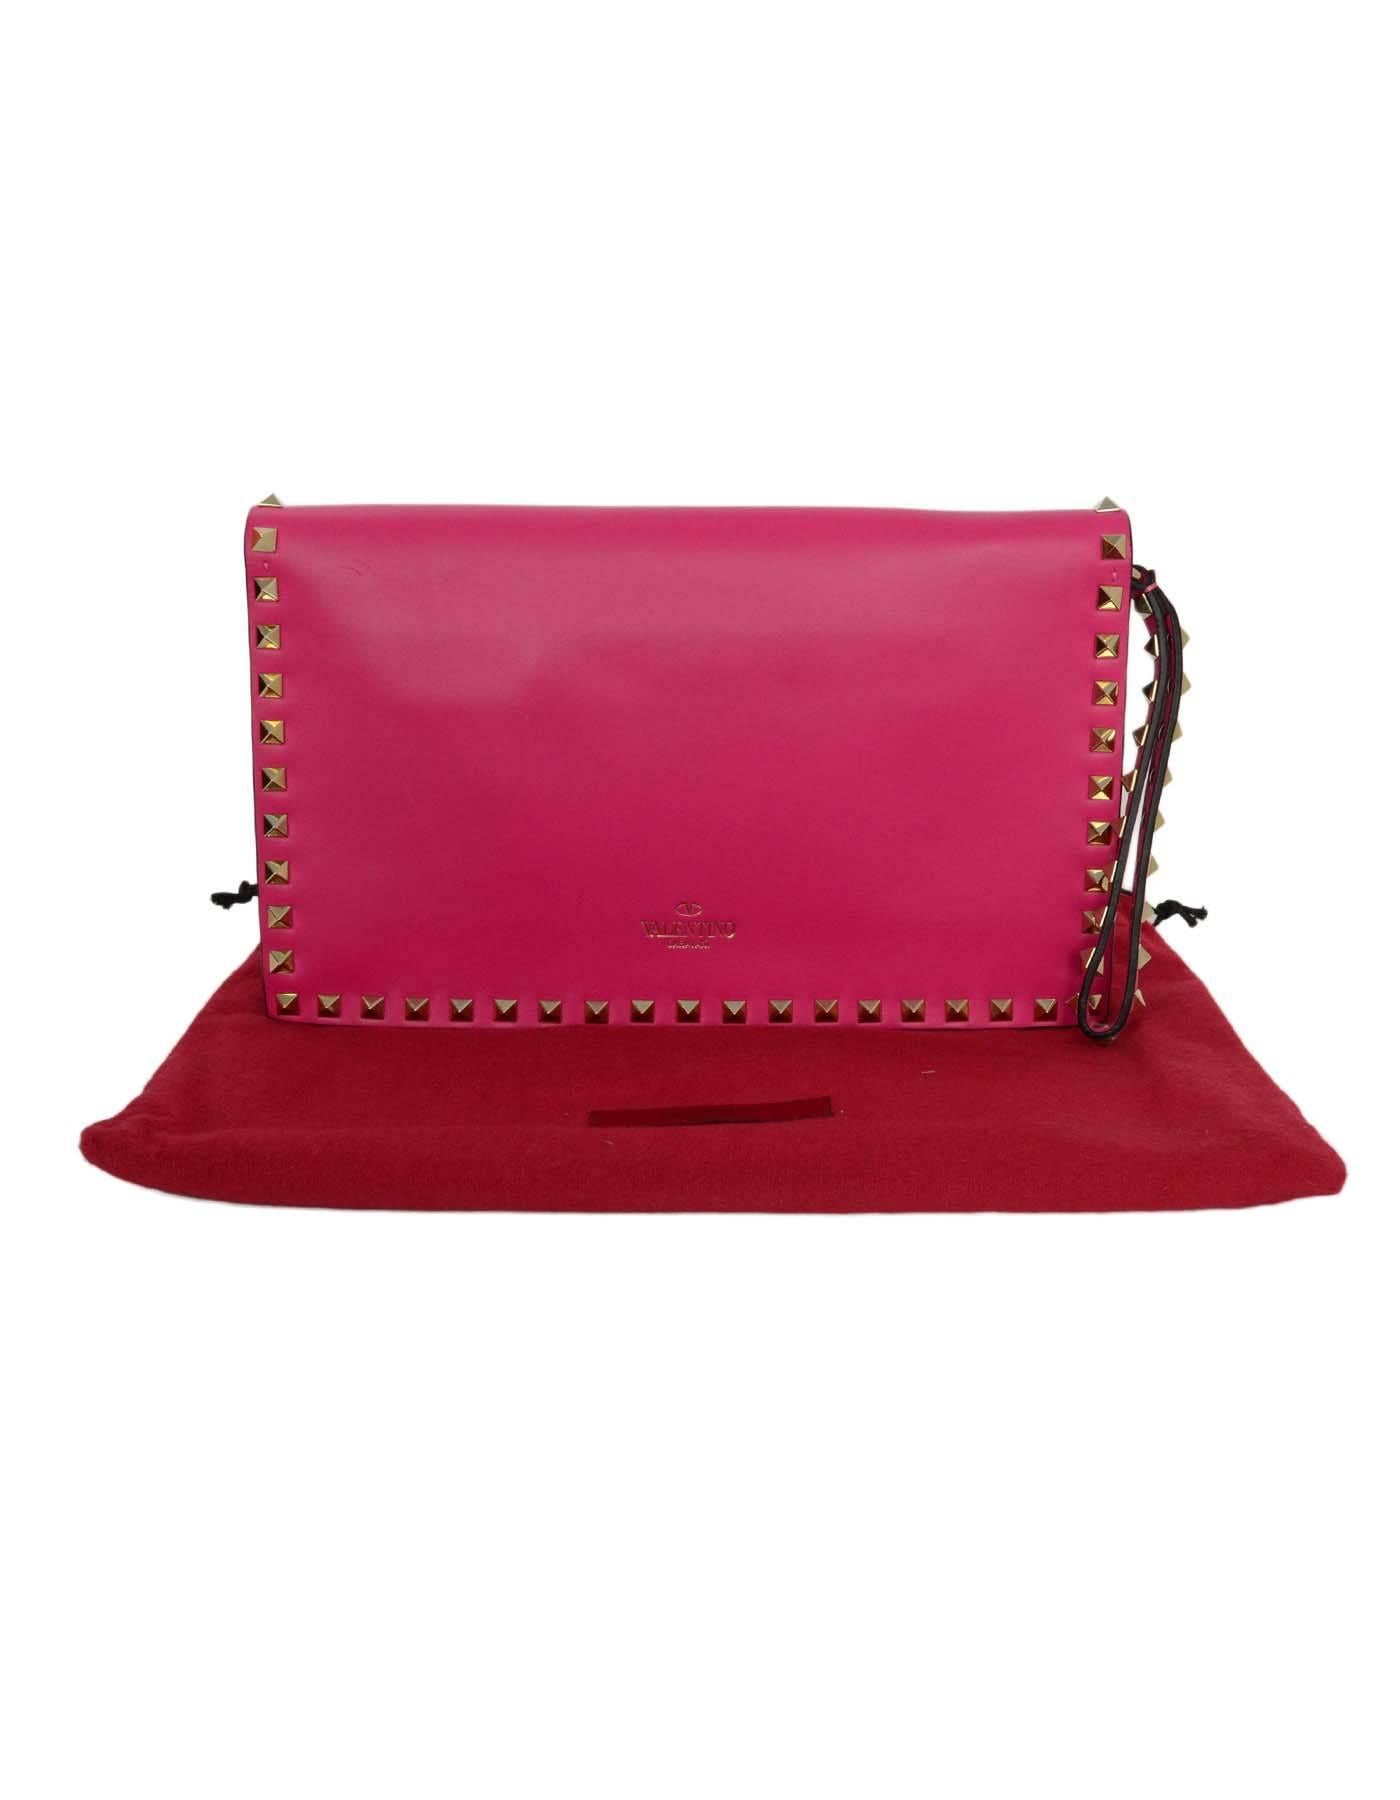 Valentino Hot Pink Leather Rockstud Flap Wristlet Clutch Bag SHW rt. $1, 695 2